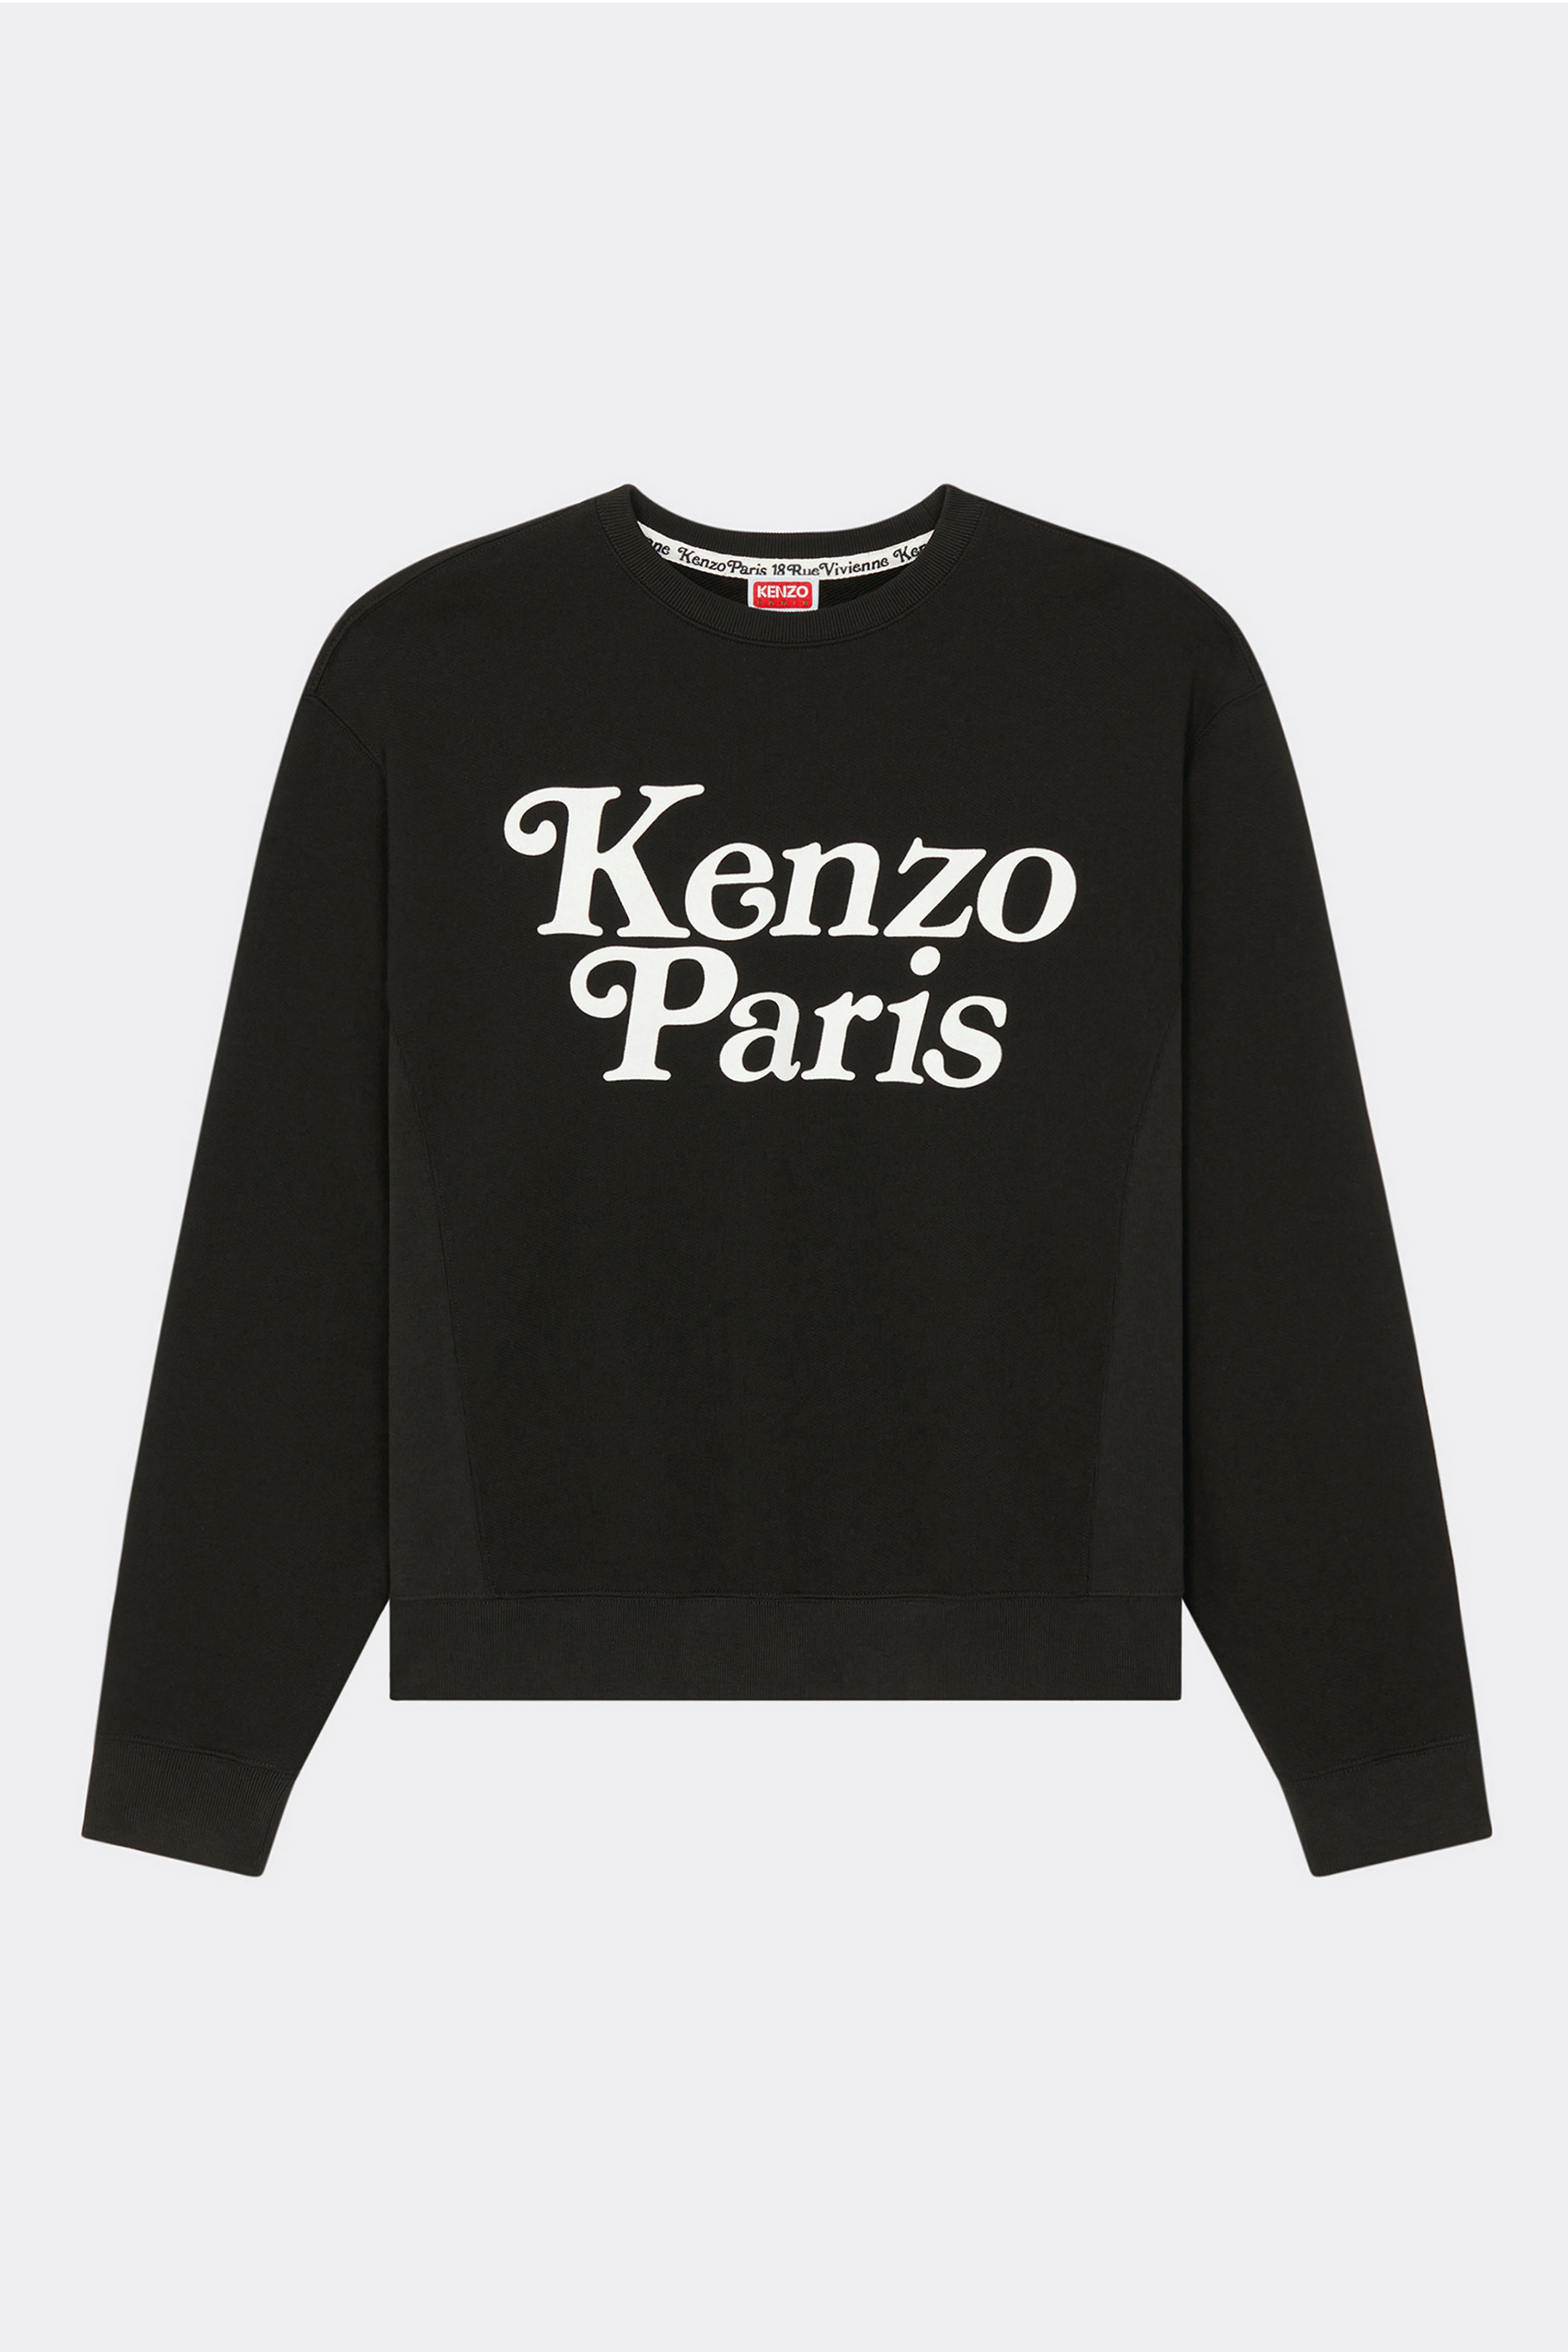 KENZO(ケンゾー)のKENZO BY VERDY CLASSIC SWEAT BLACKの通販｜PALETTE ...